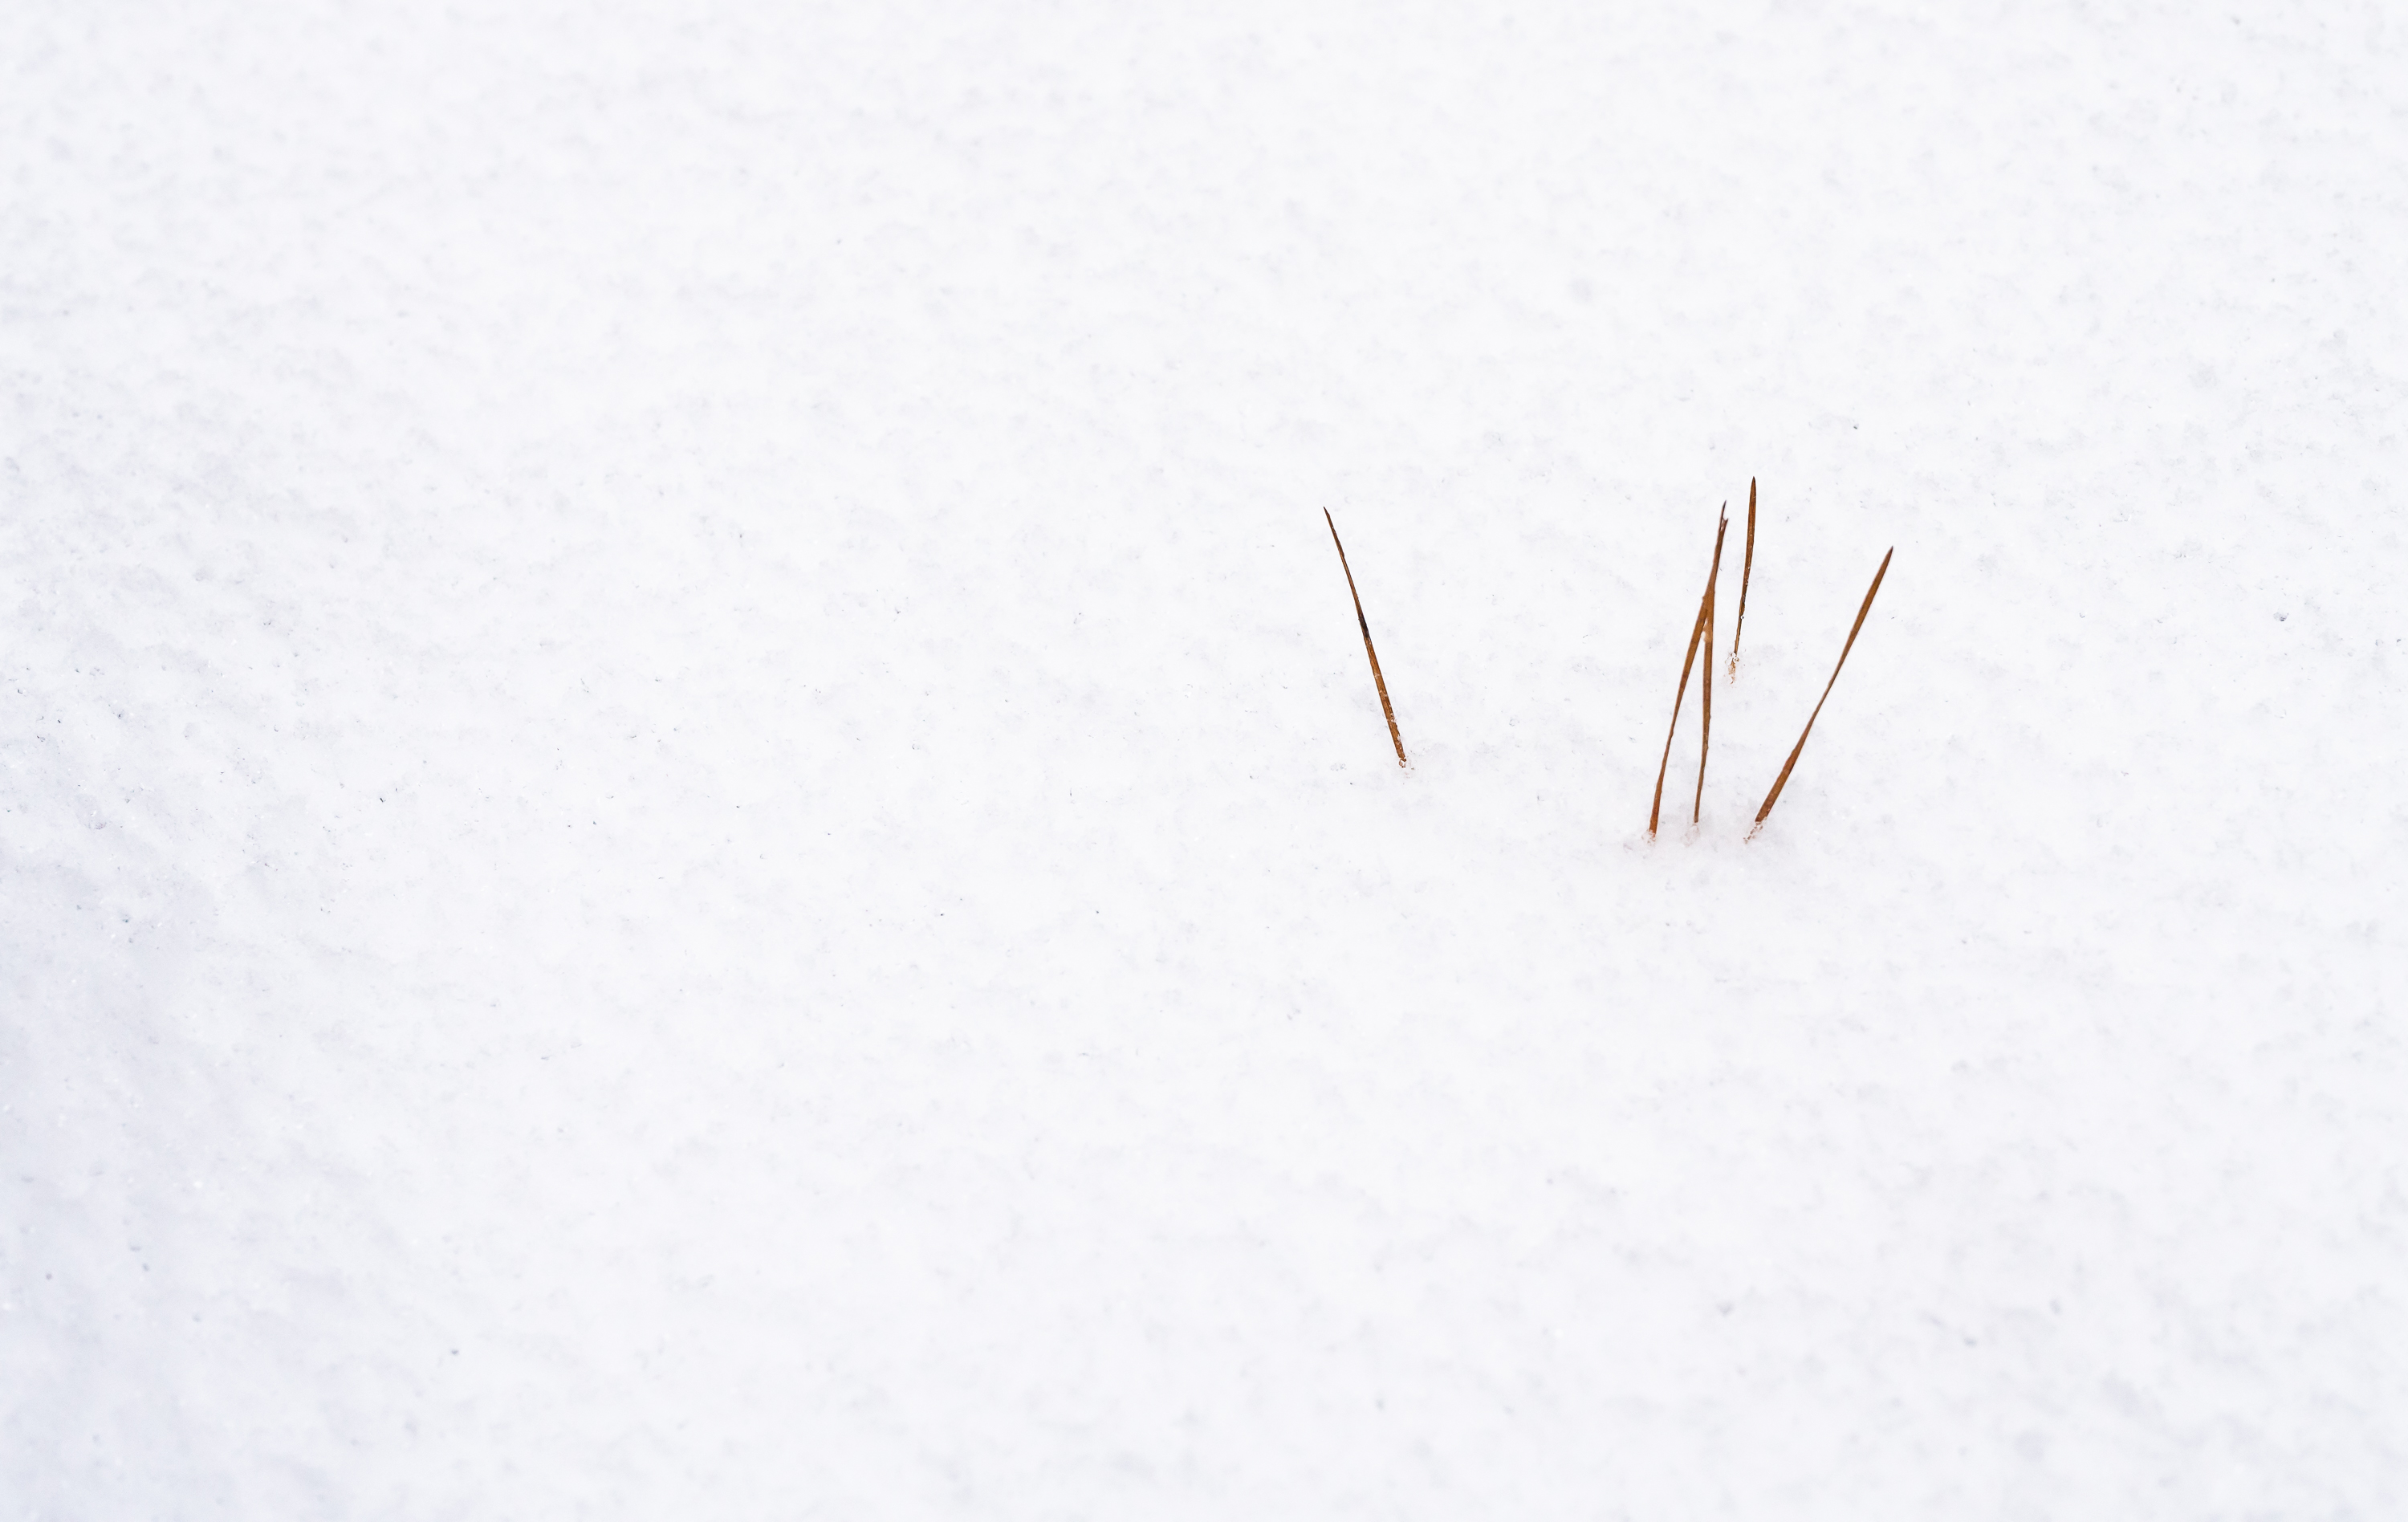 Dried grasses in snow, Chapel Hill, North Carolina (2018)